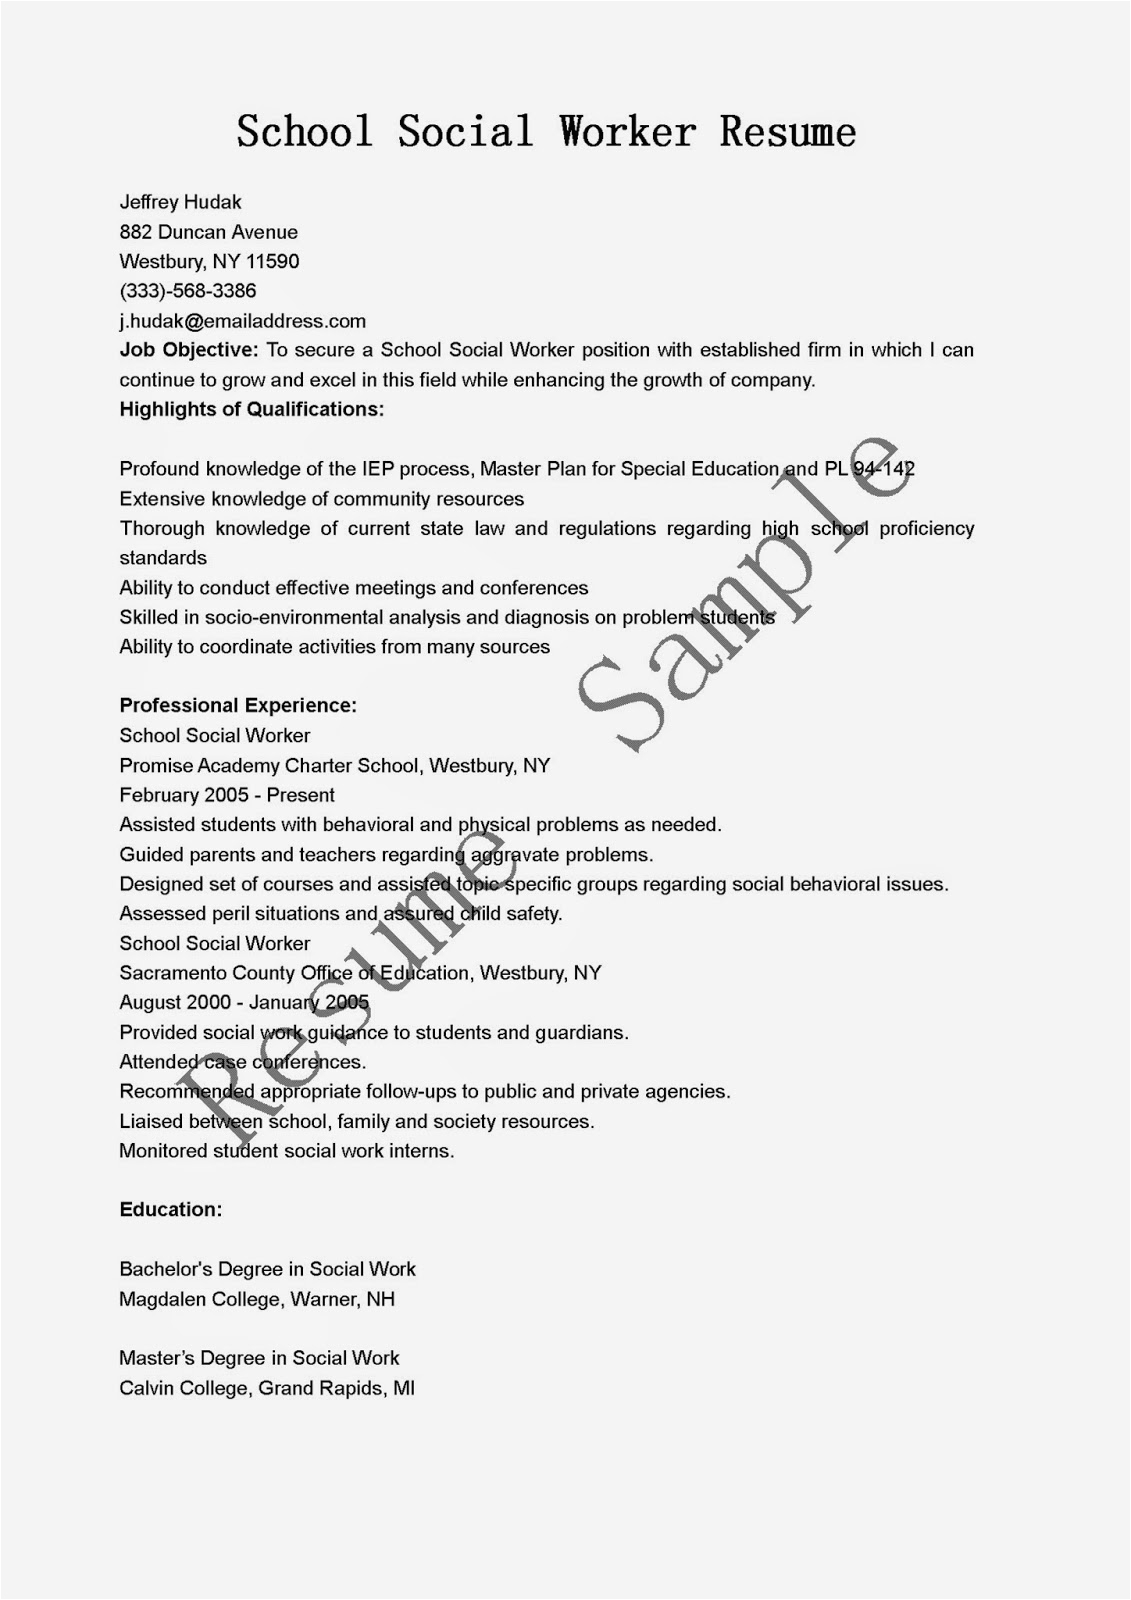 Social Work Student Objective Resume Samples Resume Samples School social Worker Resume Sample